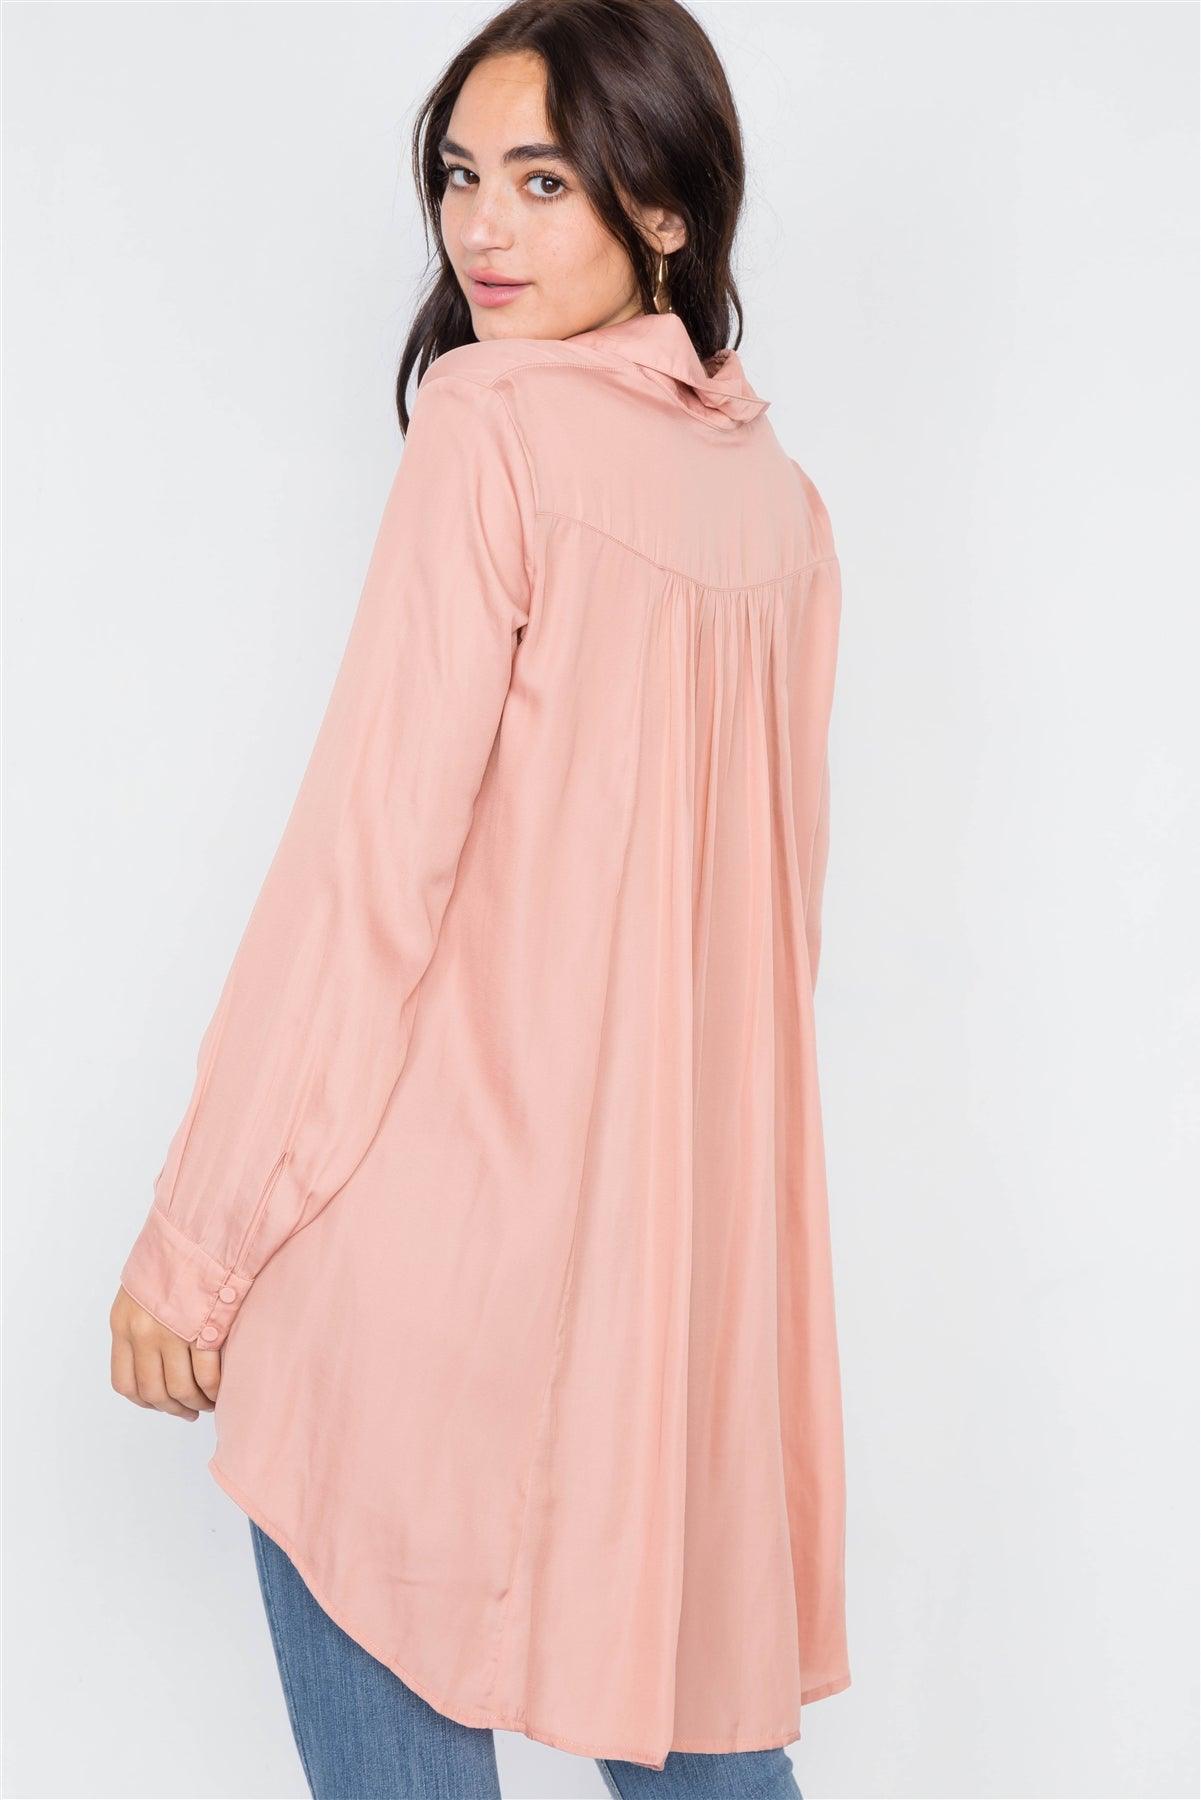 Silk Baked Peach High-Low Tunic Dress /3-2-1